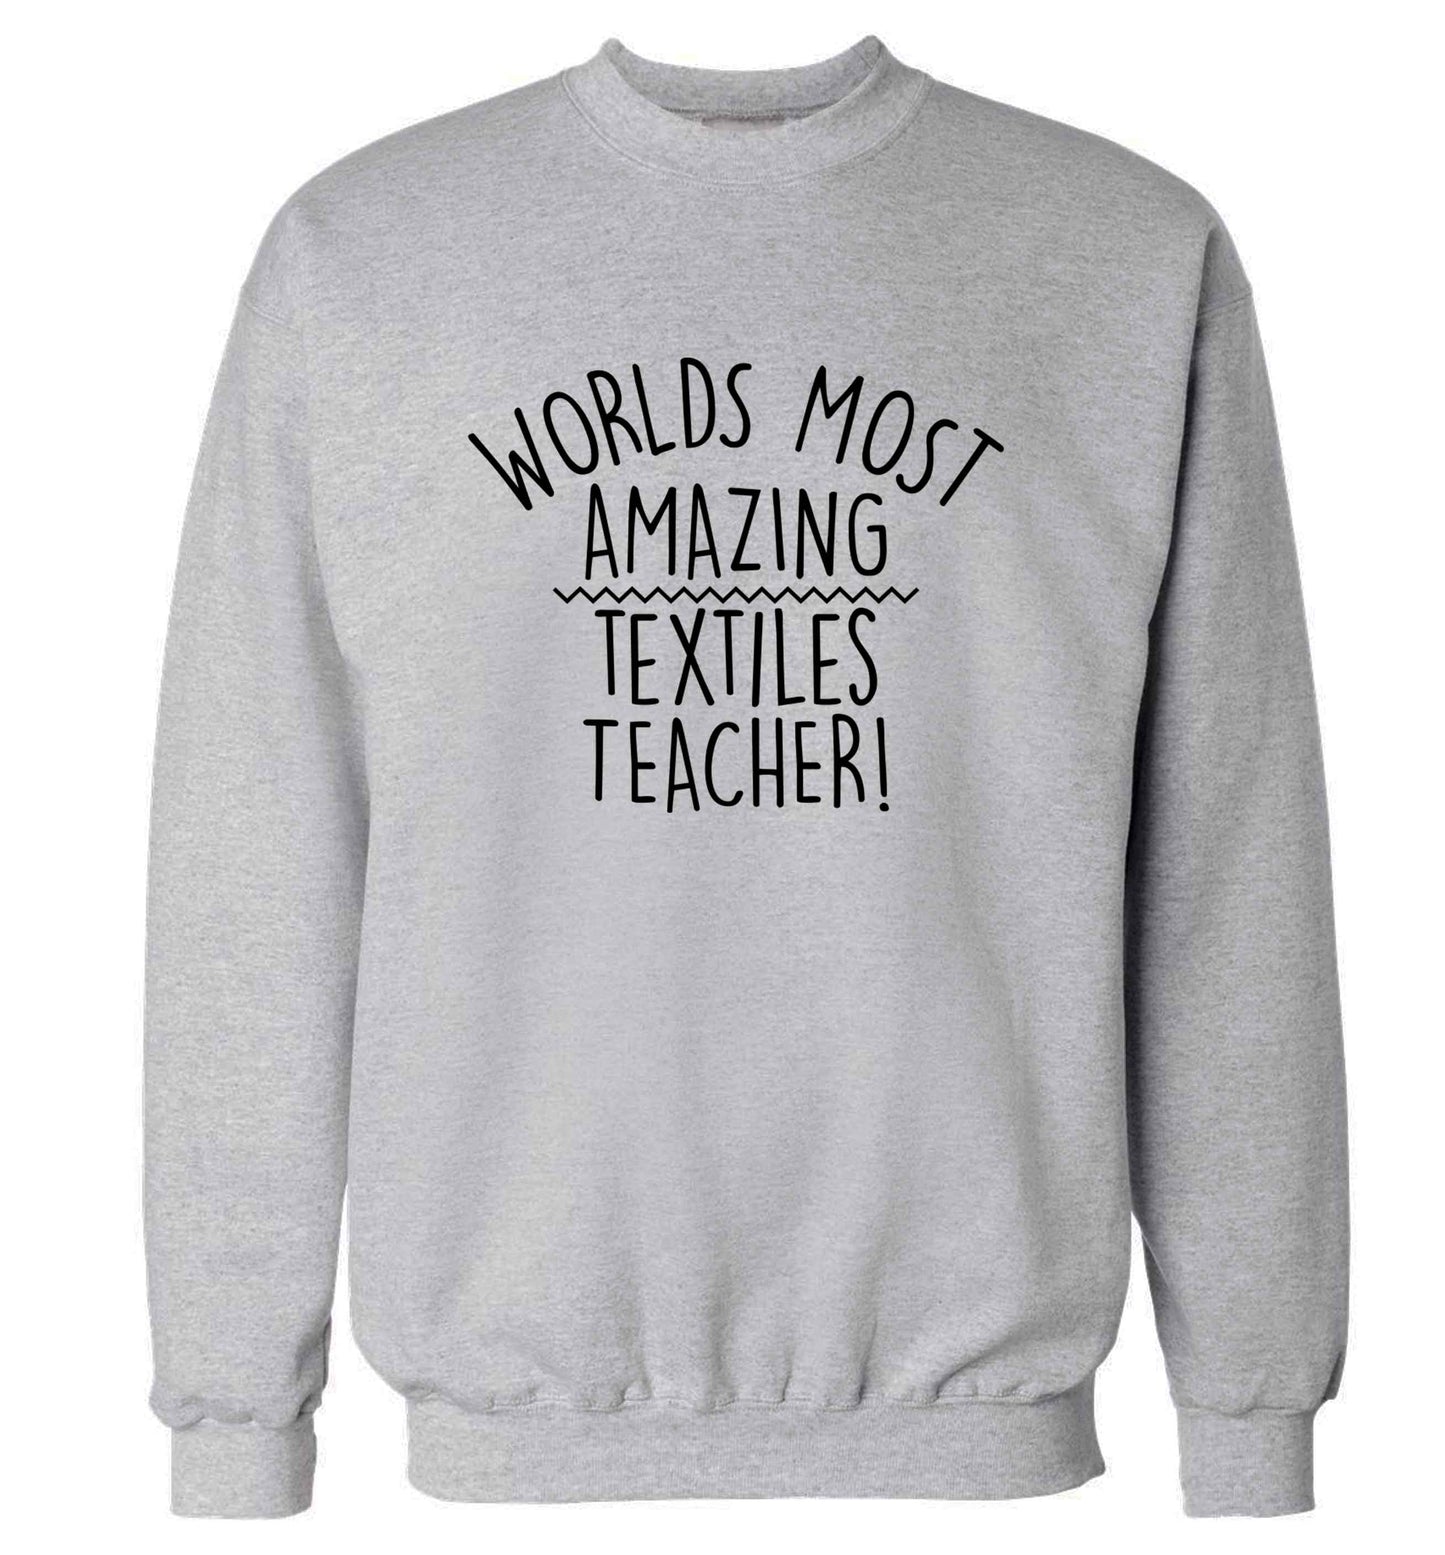 Worlds most amazing textiles teacher adult's unisex grey sweater 2XL